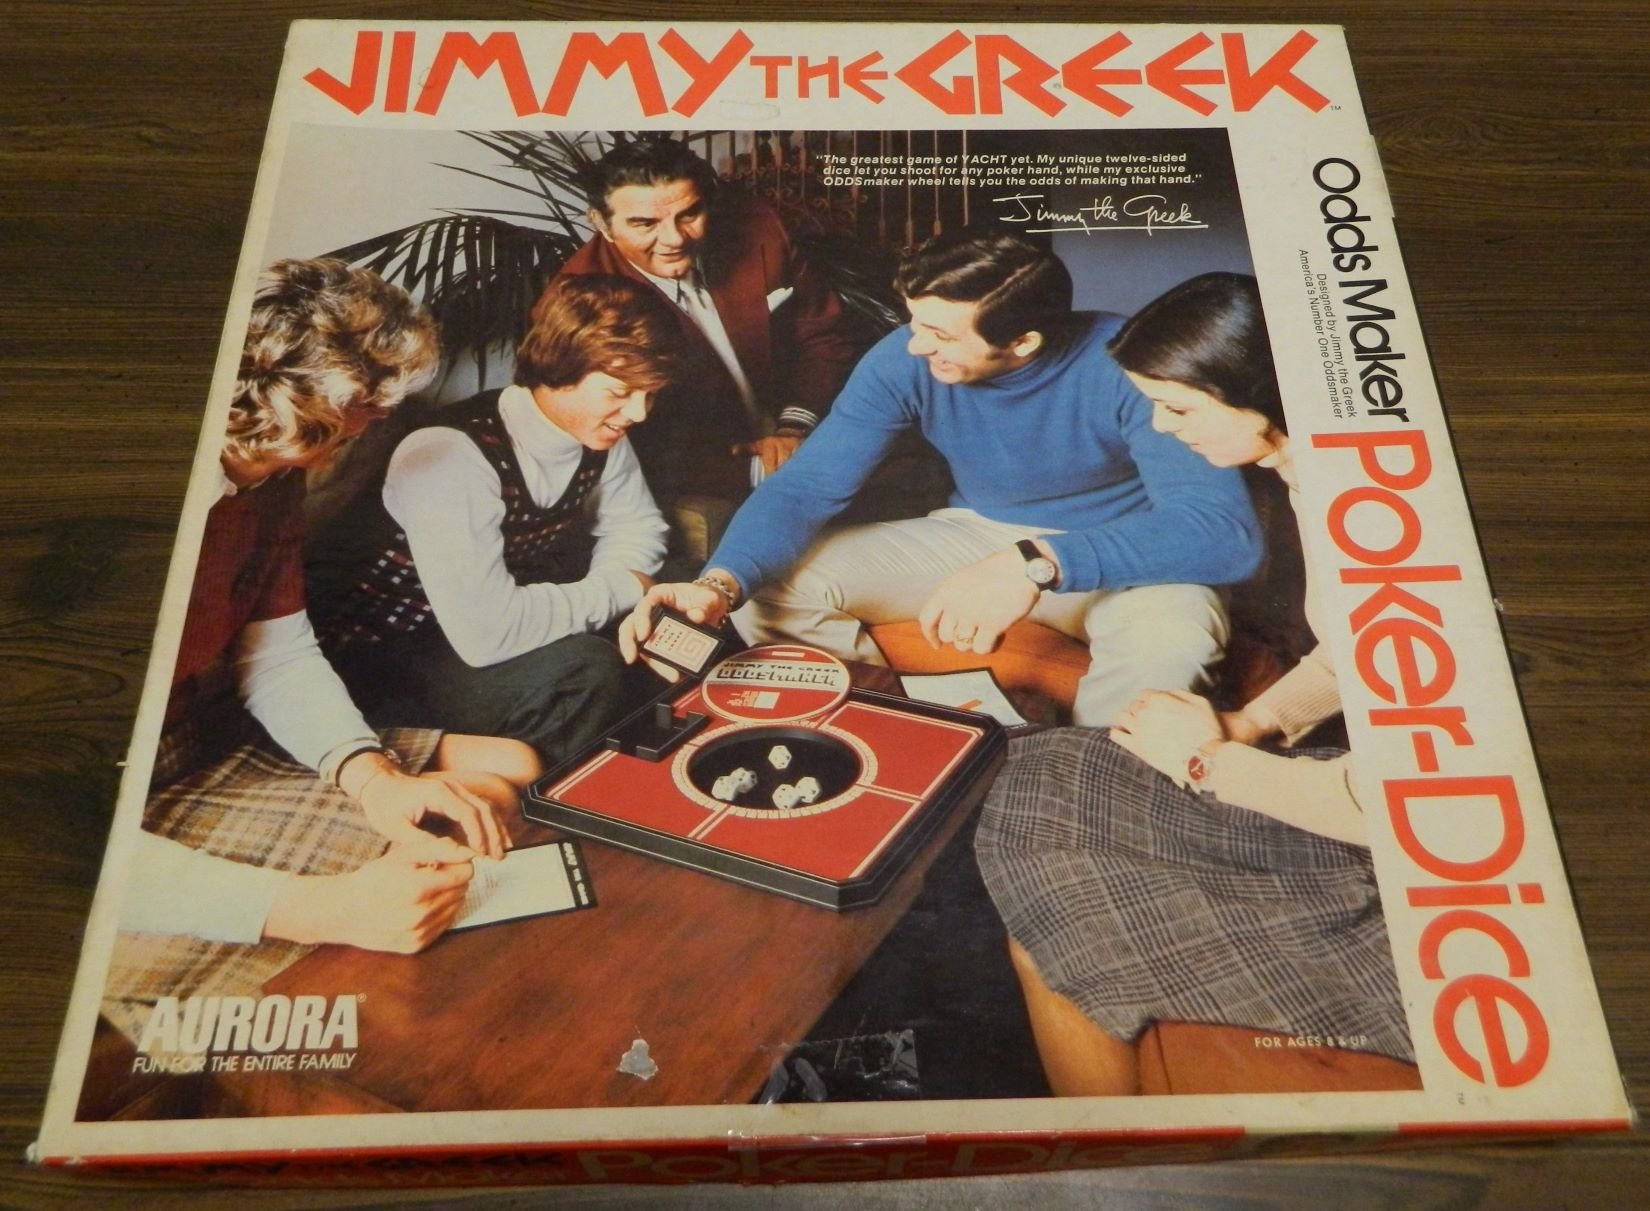 Box for Jimmy the Greek Oddsmaker Poker-Dice